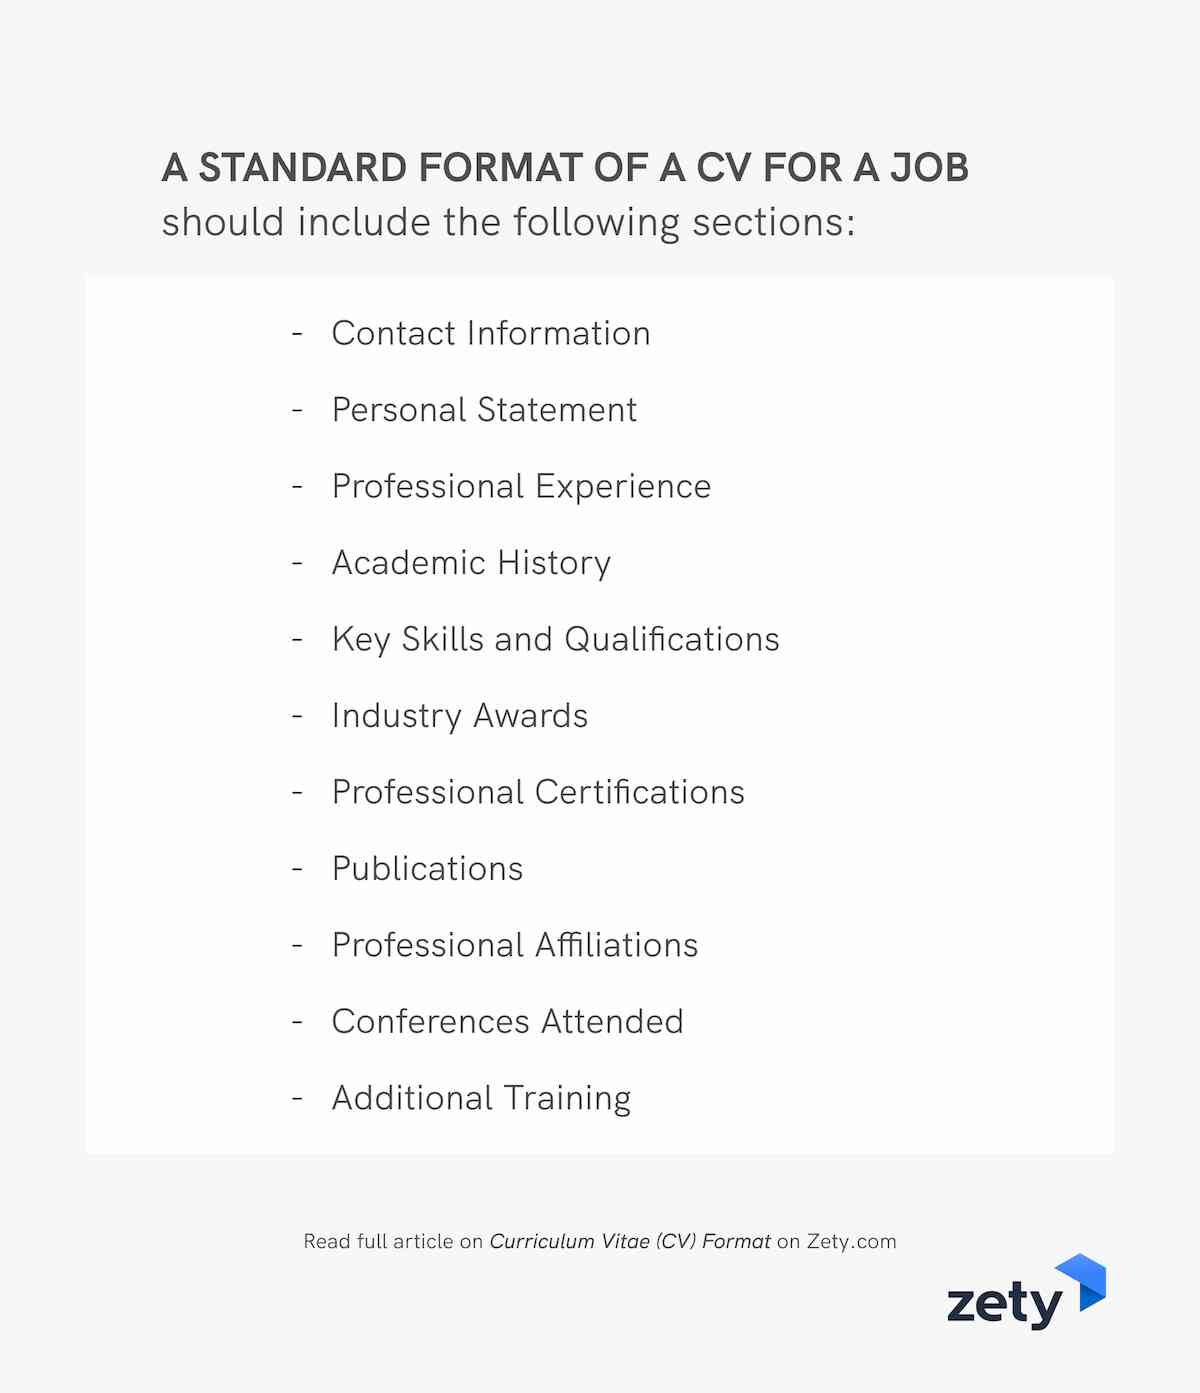 STANDARD FORMAT OF A CV FOR A JOB